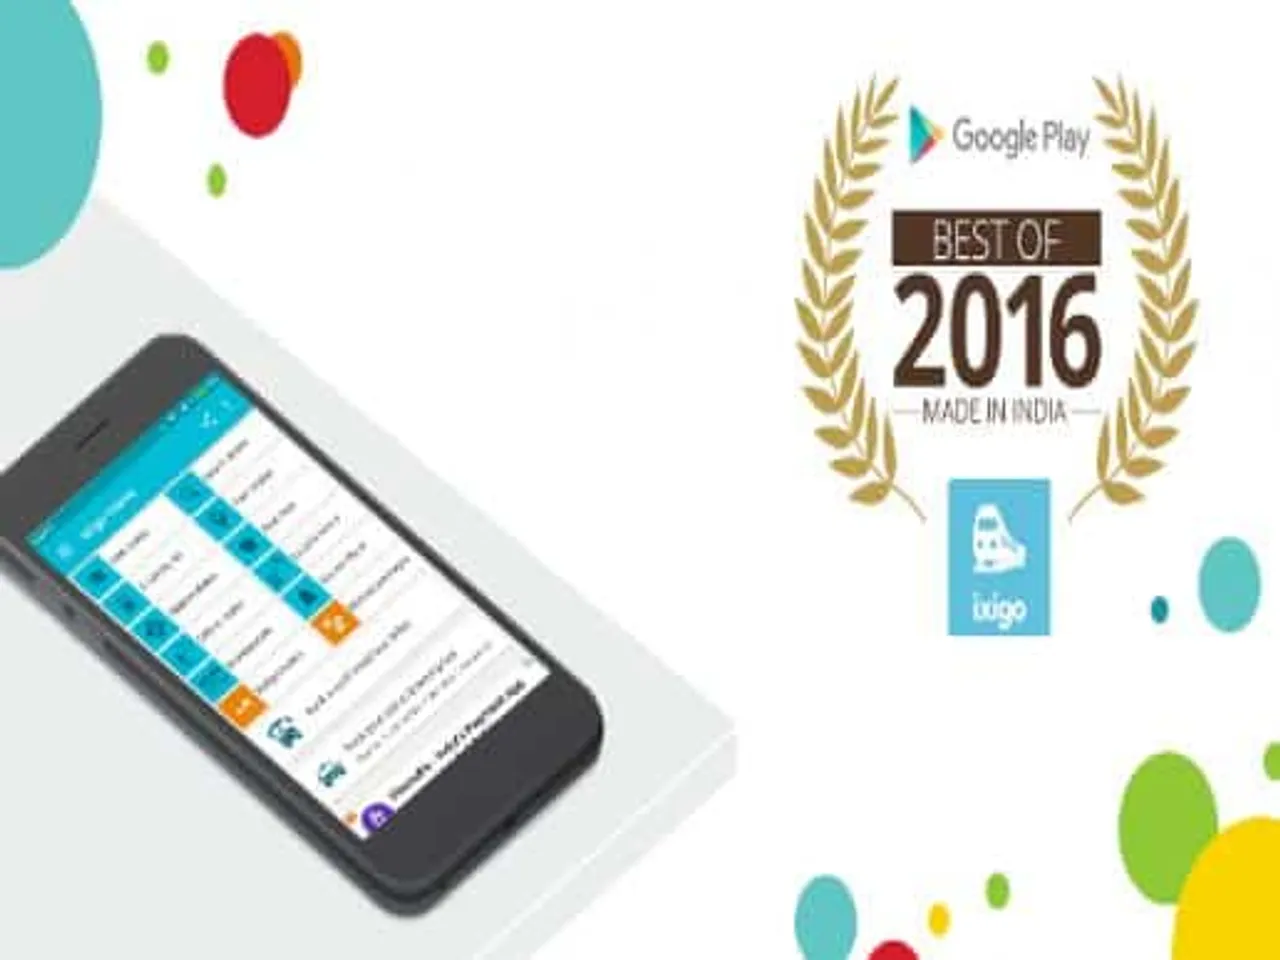 ixigo Train app Awarded the Best ‘Made in India’ app by Google